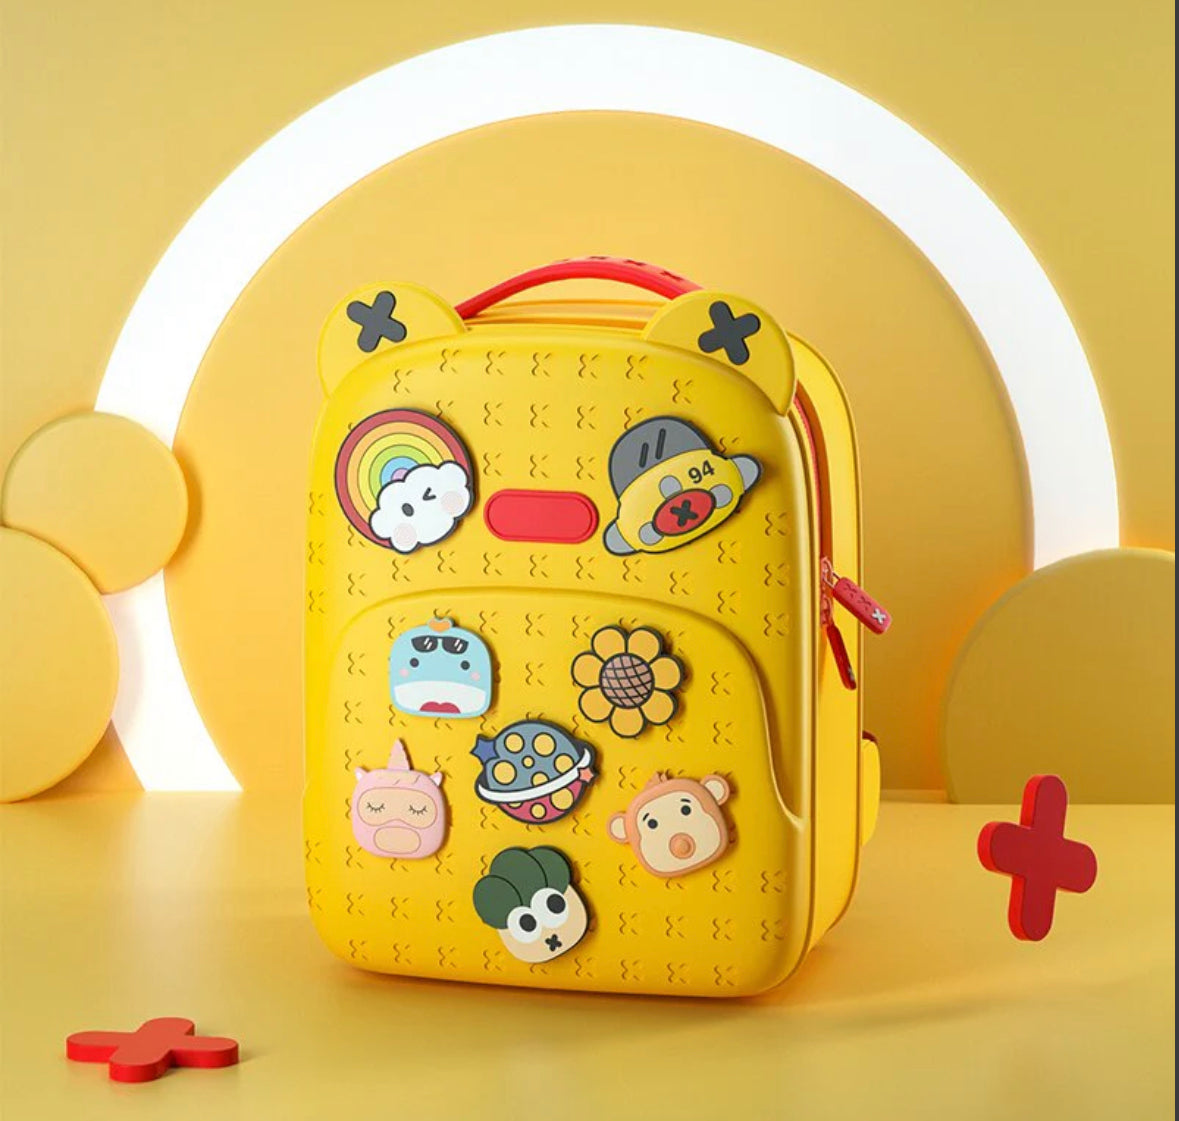 Fashionable school waterproof backpack.